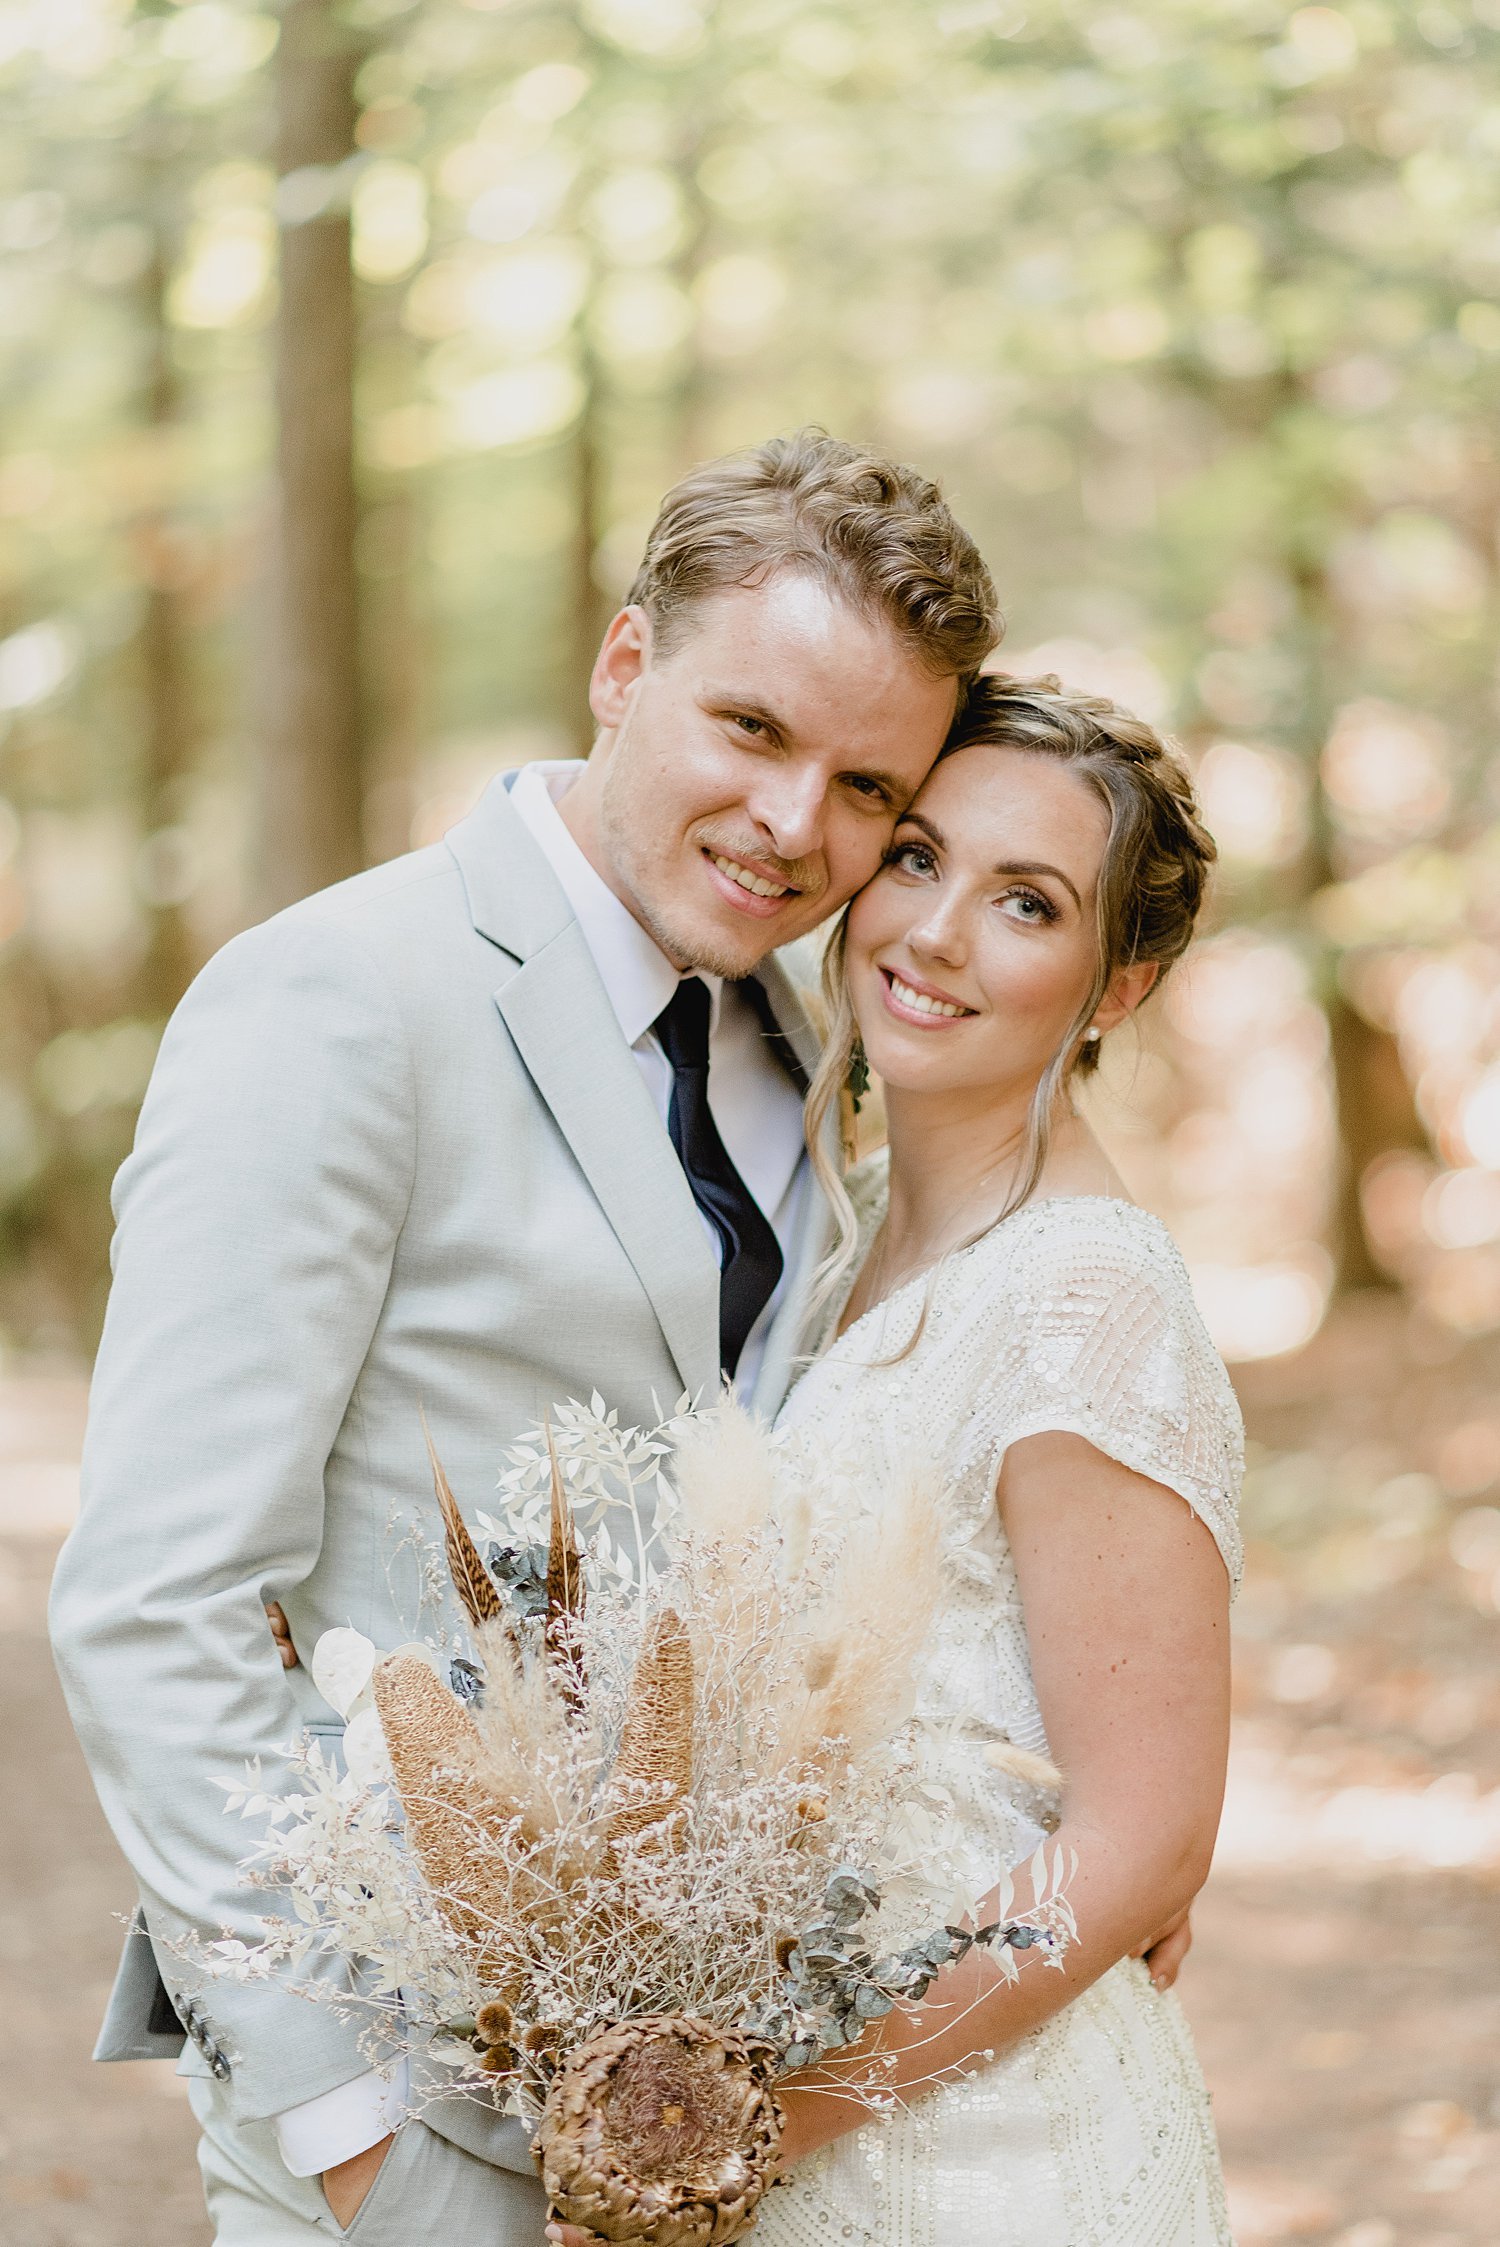 A Boho Fall Wedding at a Family Built Cabin in Lyndhurst, Ontario | Prince Edward County Wedding Photographer | Holly McMurter Photographs_0080.jpg